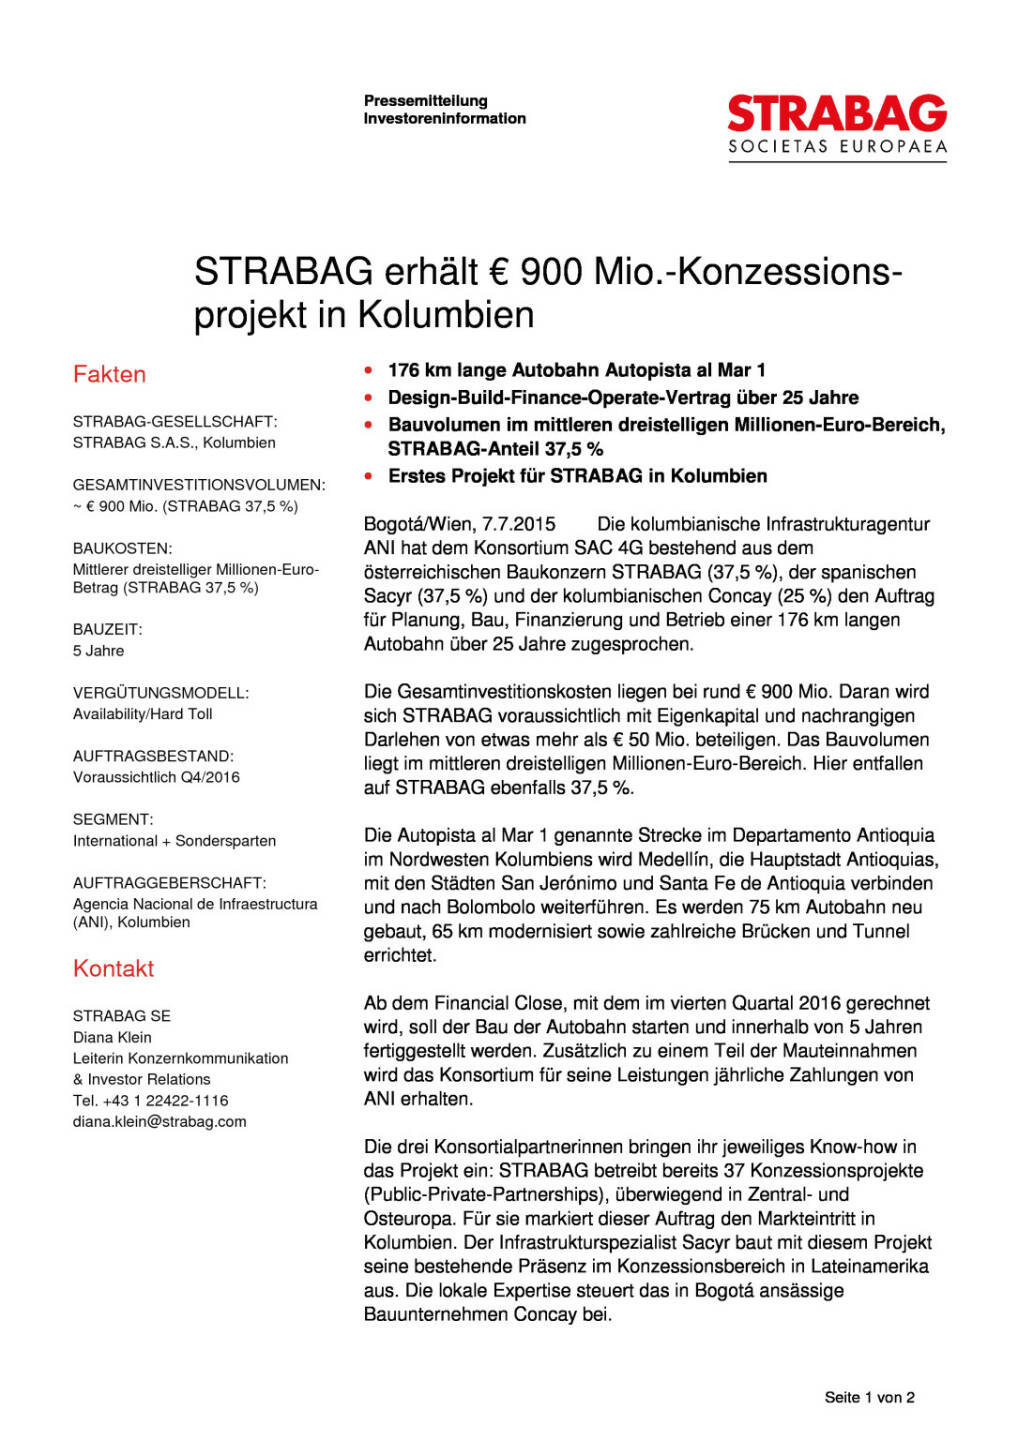 Strabag erhält € 900 Mio.-Konzessionsprojekt in Kolumbien, Seite 1/2, komplettes Dokument unter http://boerse-social.com/static/uploads/file_209_strabag_kolumbien.pdf